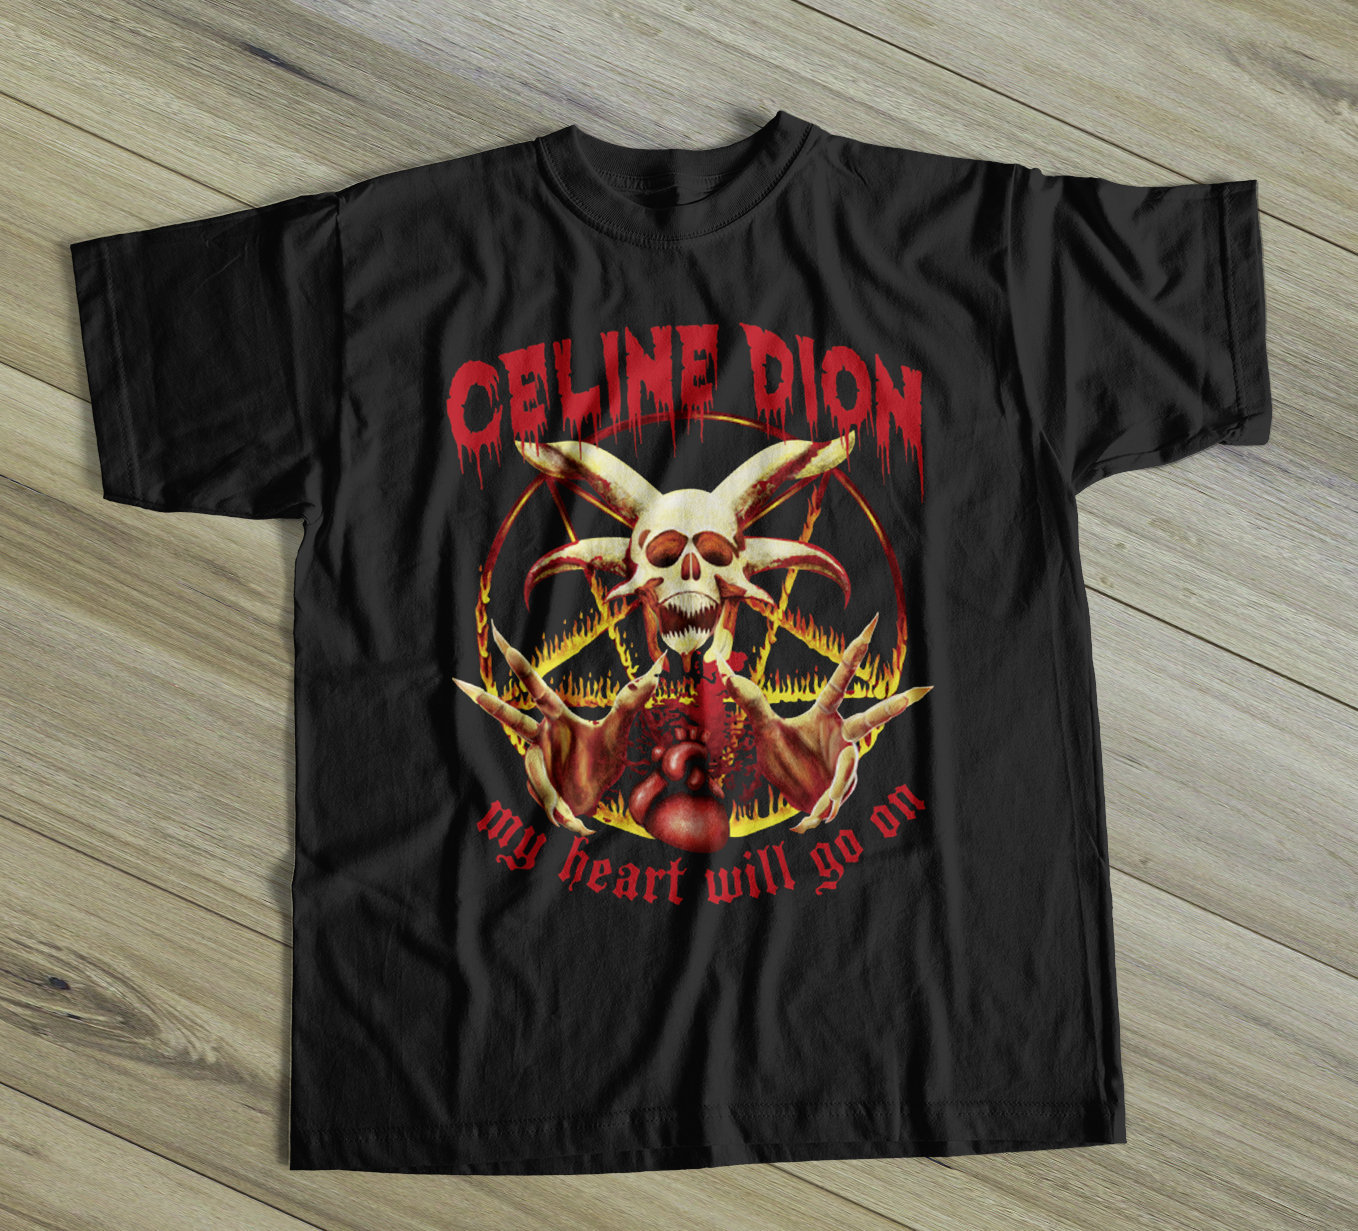 Celine-dion-parody-shirt-celine-dion-rock-shirt-metal-shirt-rock-shirt-thrash-metal-shirt-funny-shirt-hard-rock-shirt-funny-shirt-cfz8s